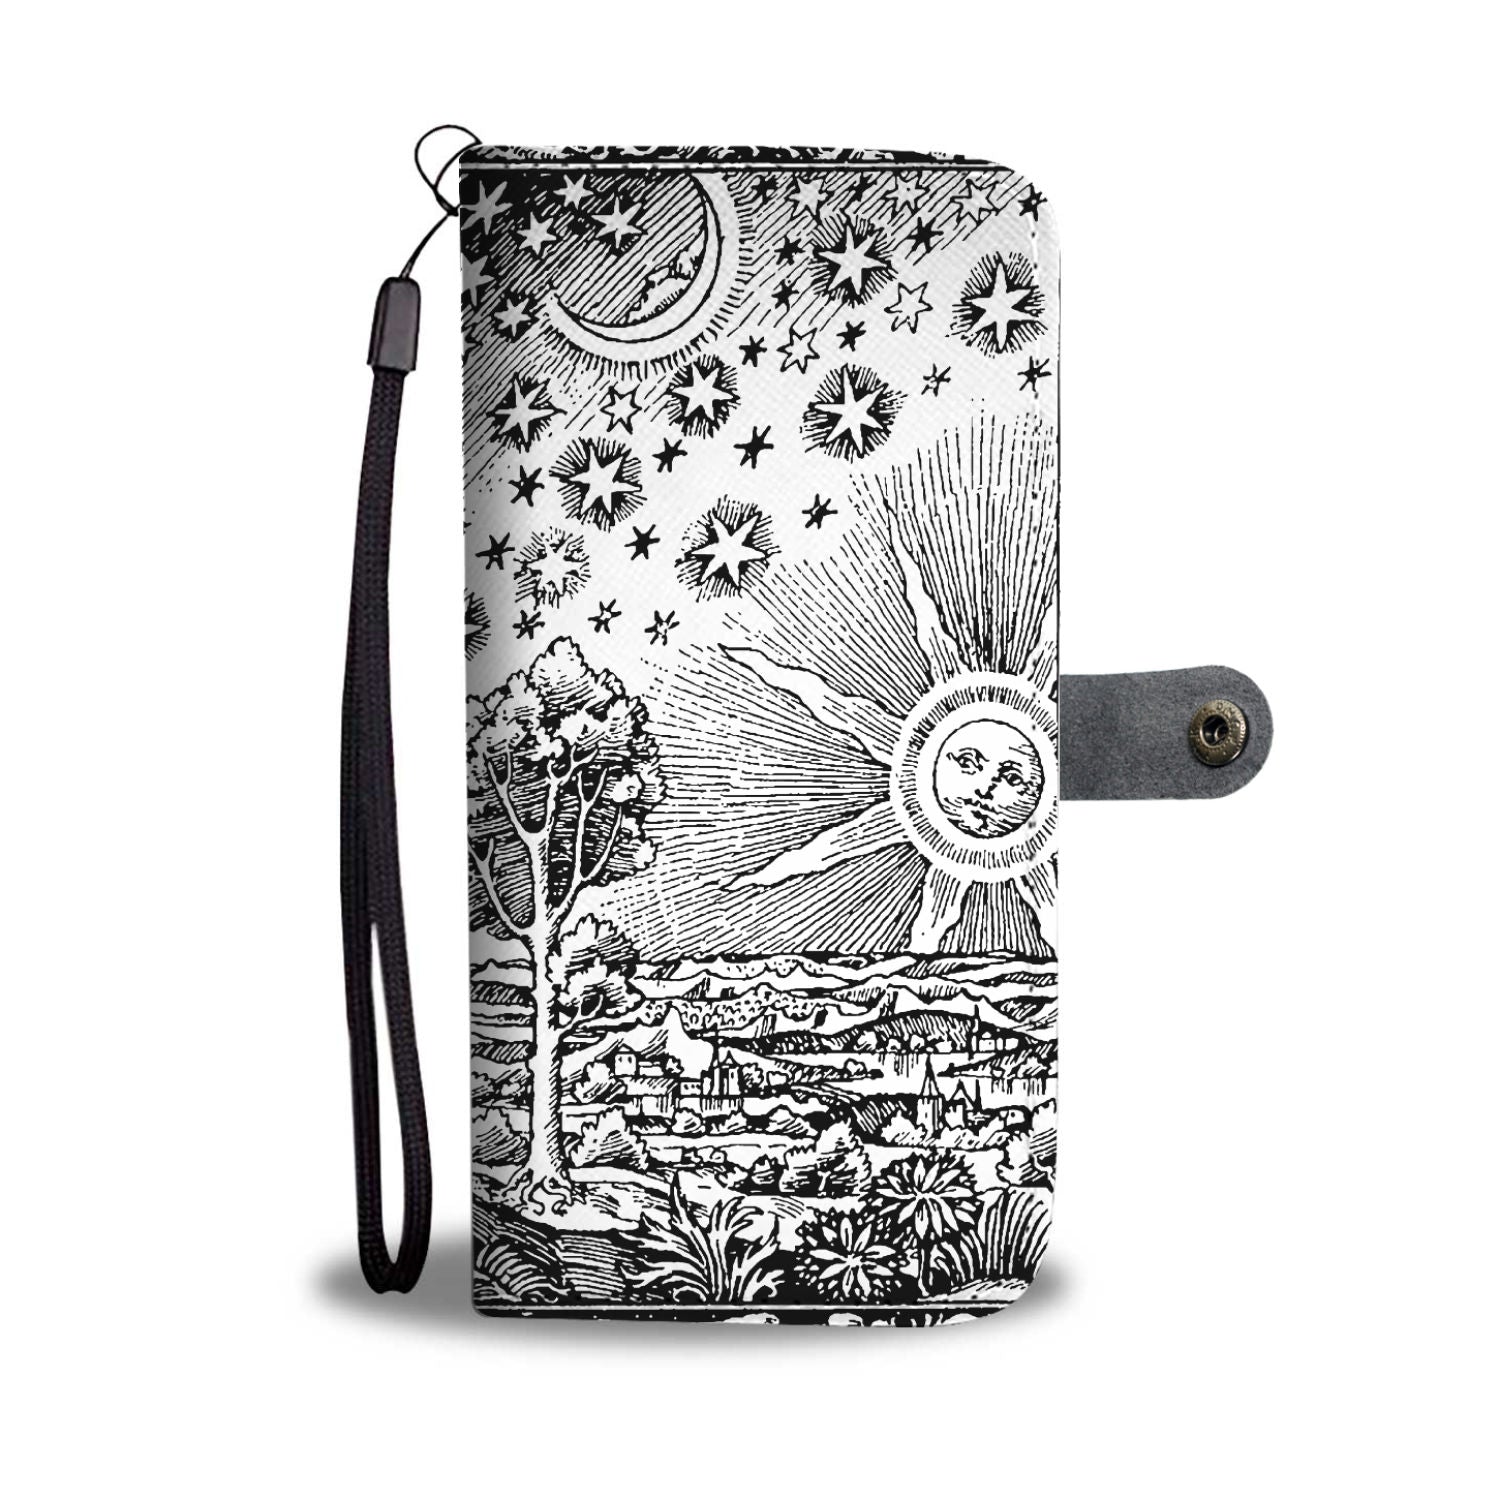 The Flammarion wallet phone case